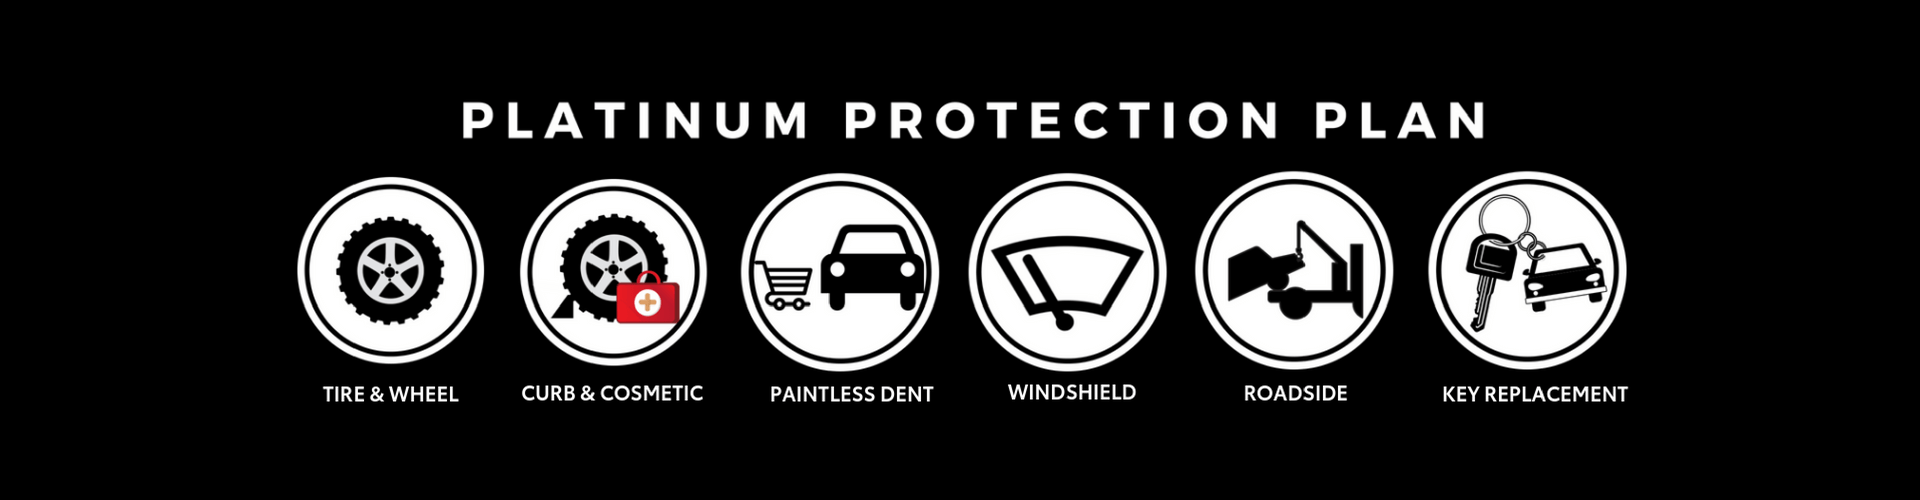 Platinum Protection